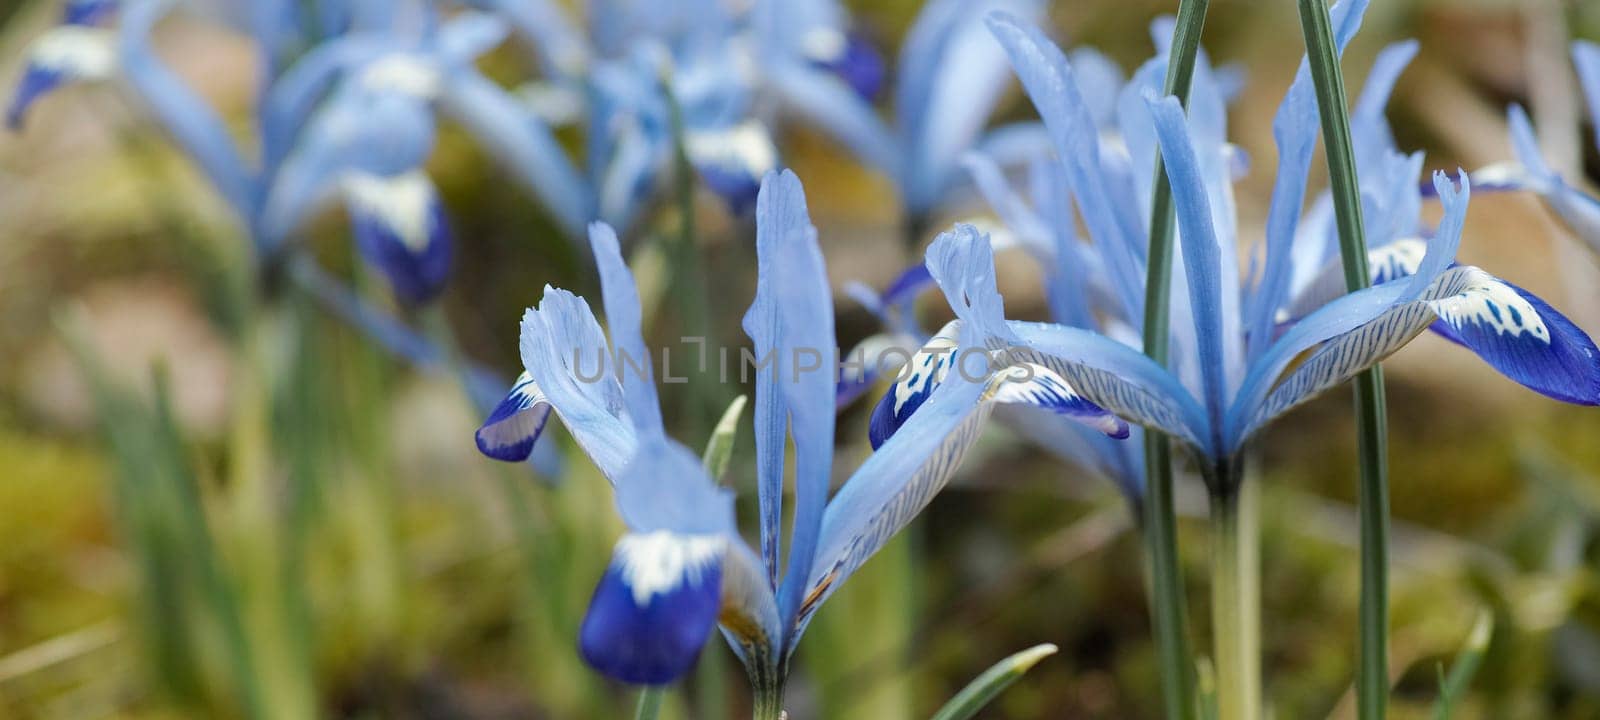 Dwarf irises by WielandTeixeira